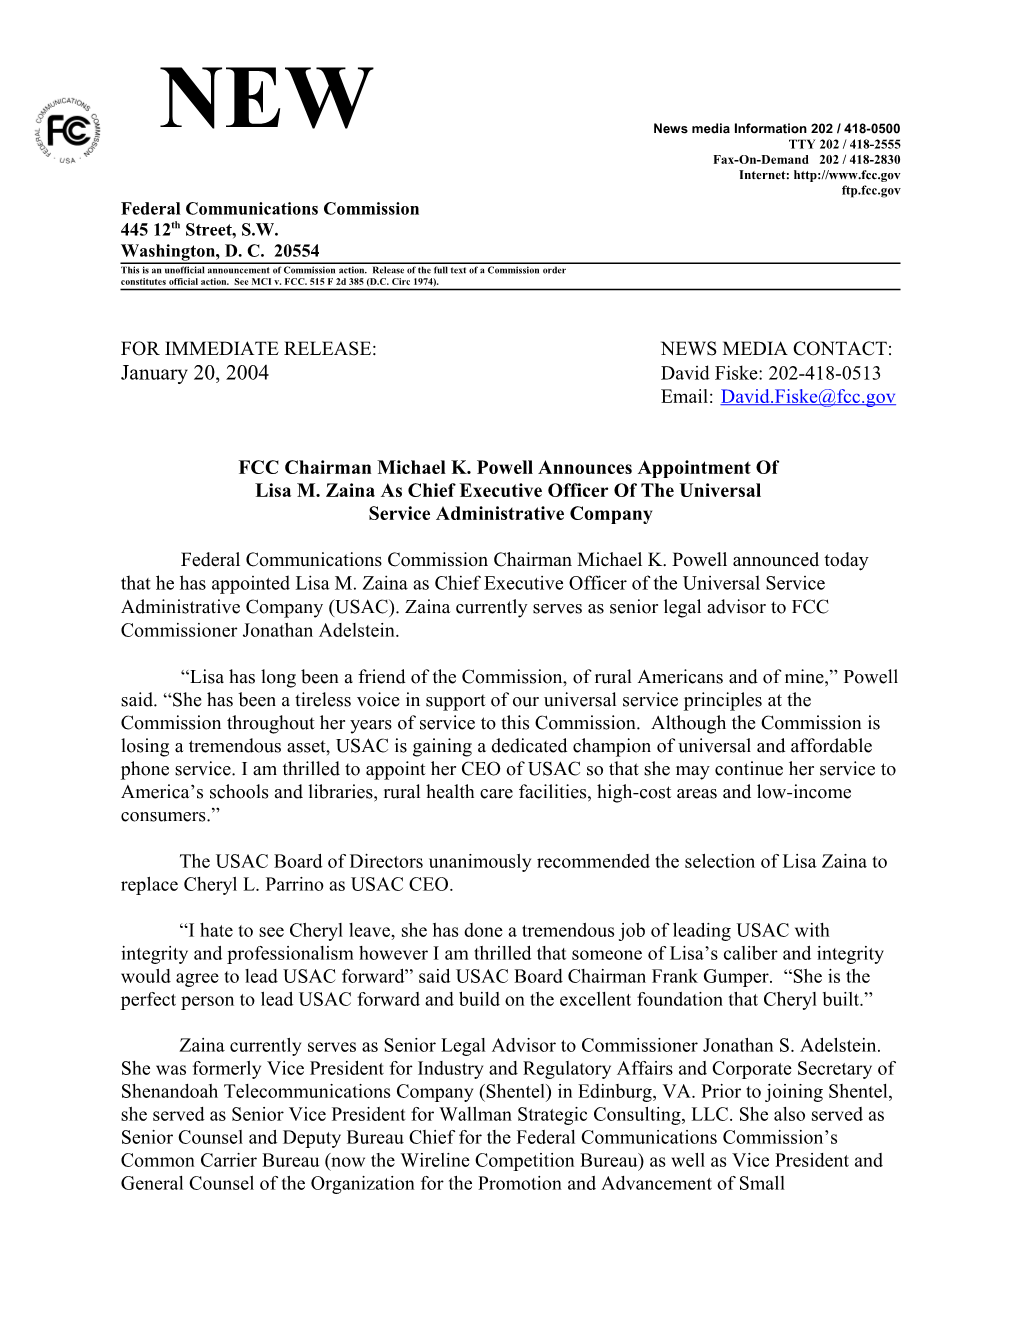 FCC Chairman Michael K. Powell Announces Appointment Of